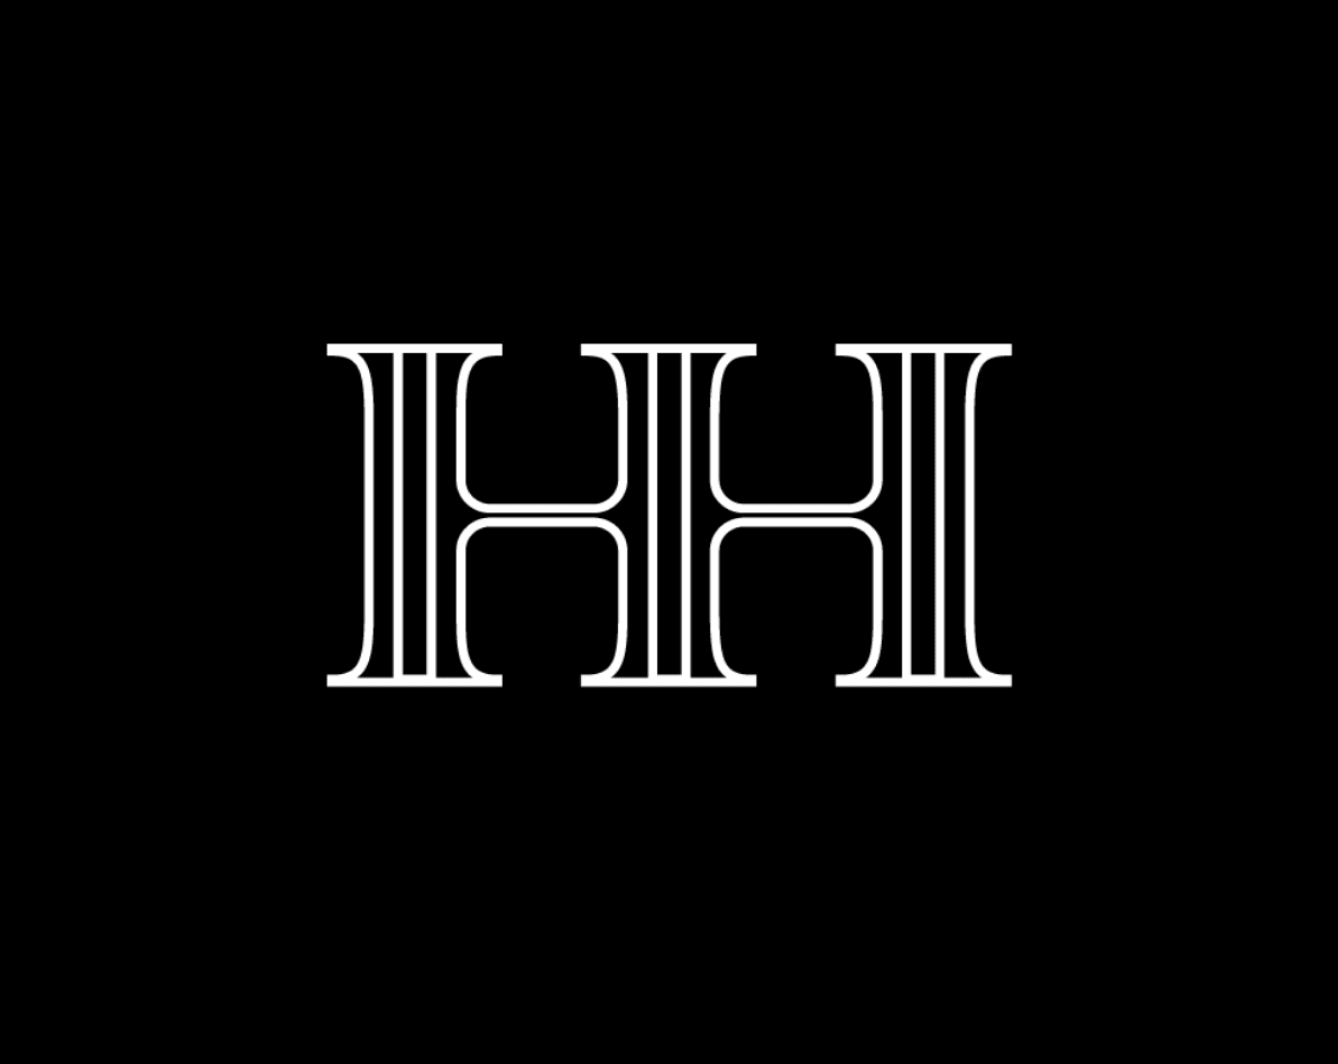 Hyde House Public Studio logo